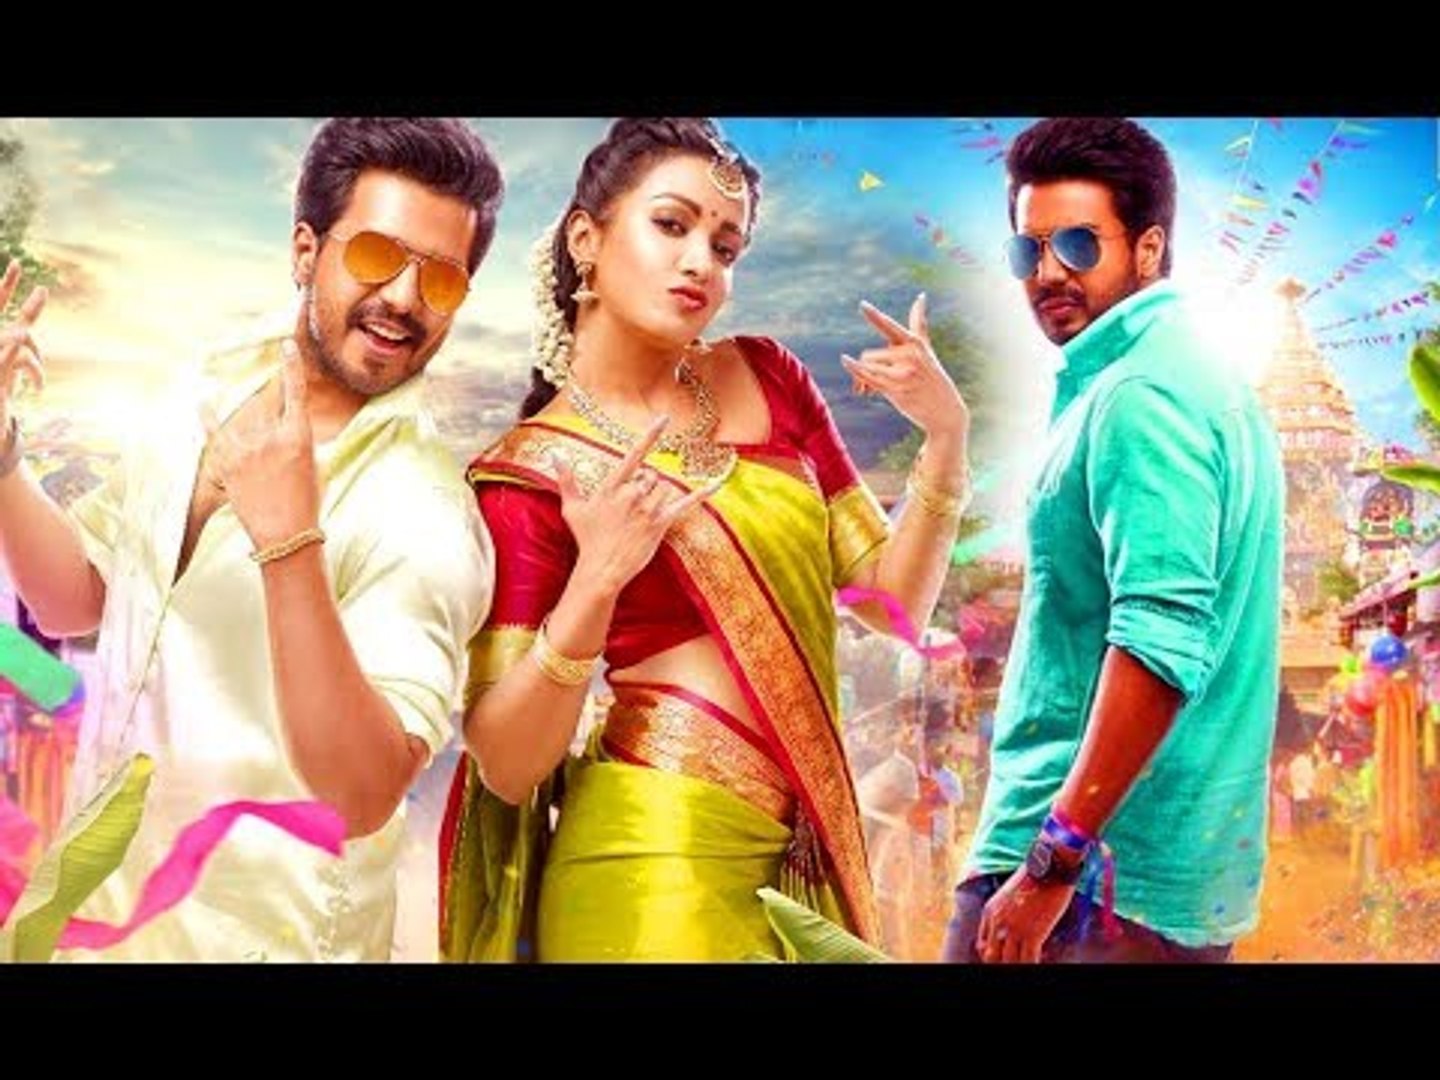 ⁣Tamil Movie Free Watch Online # Tamil Movies 2017 Download # Tamil New Movies 2017 Full Movie